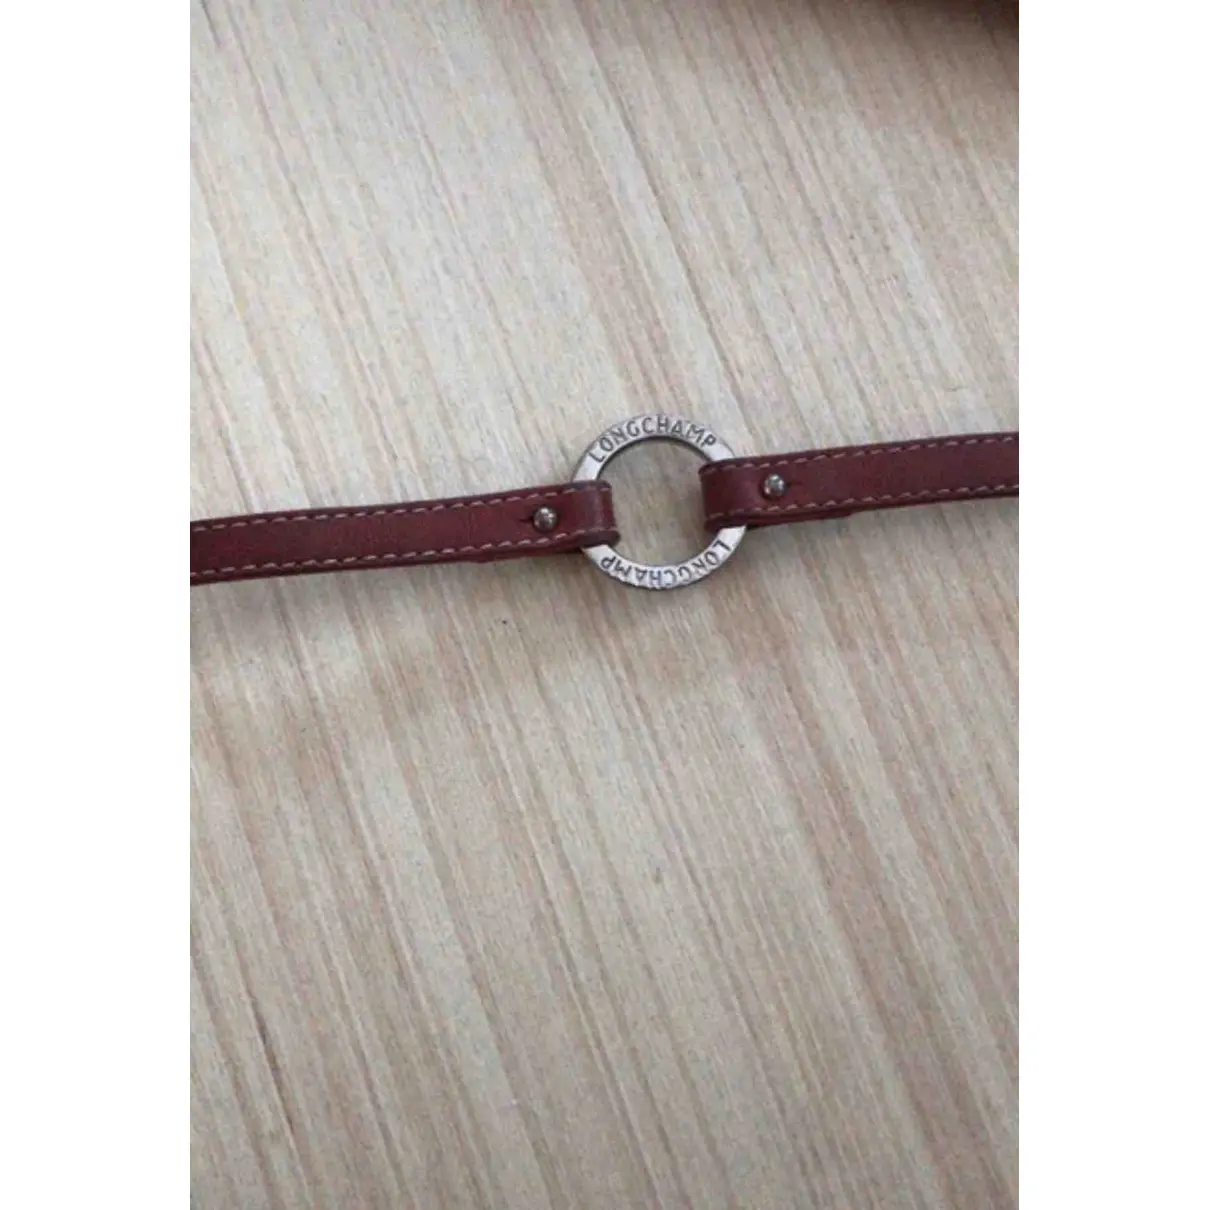 Buy Longchamp Leather bracelet online